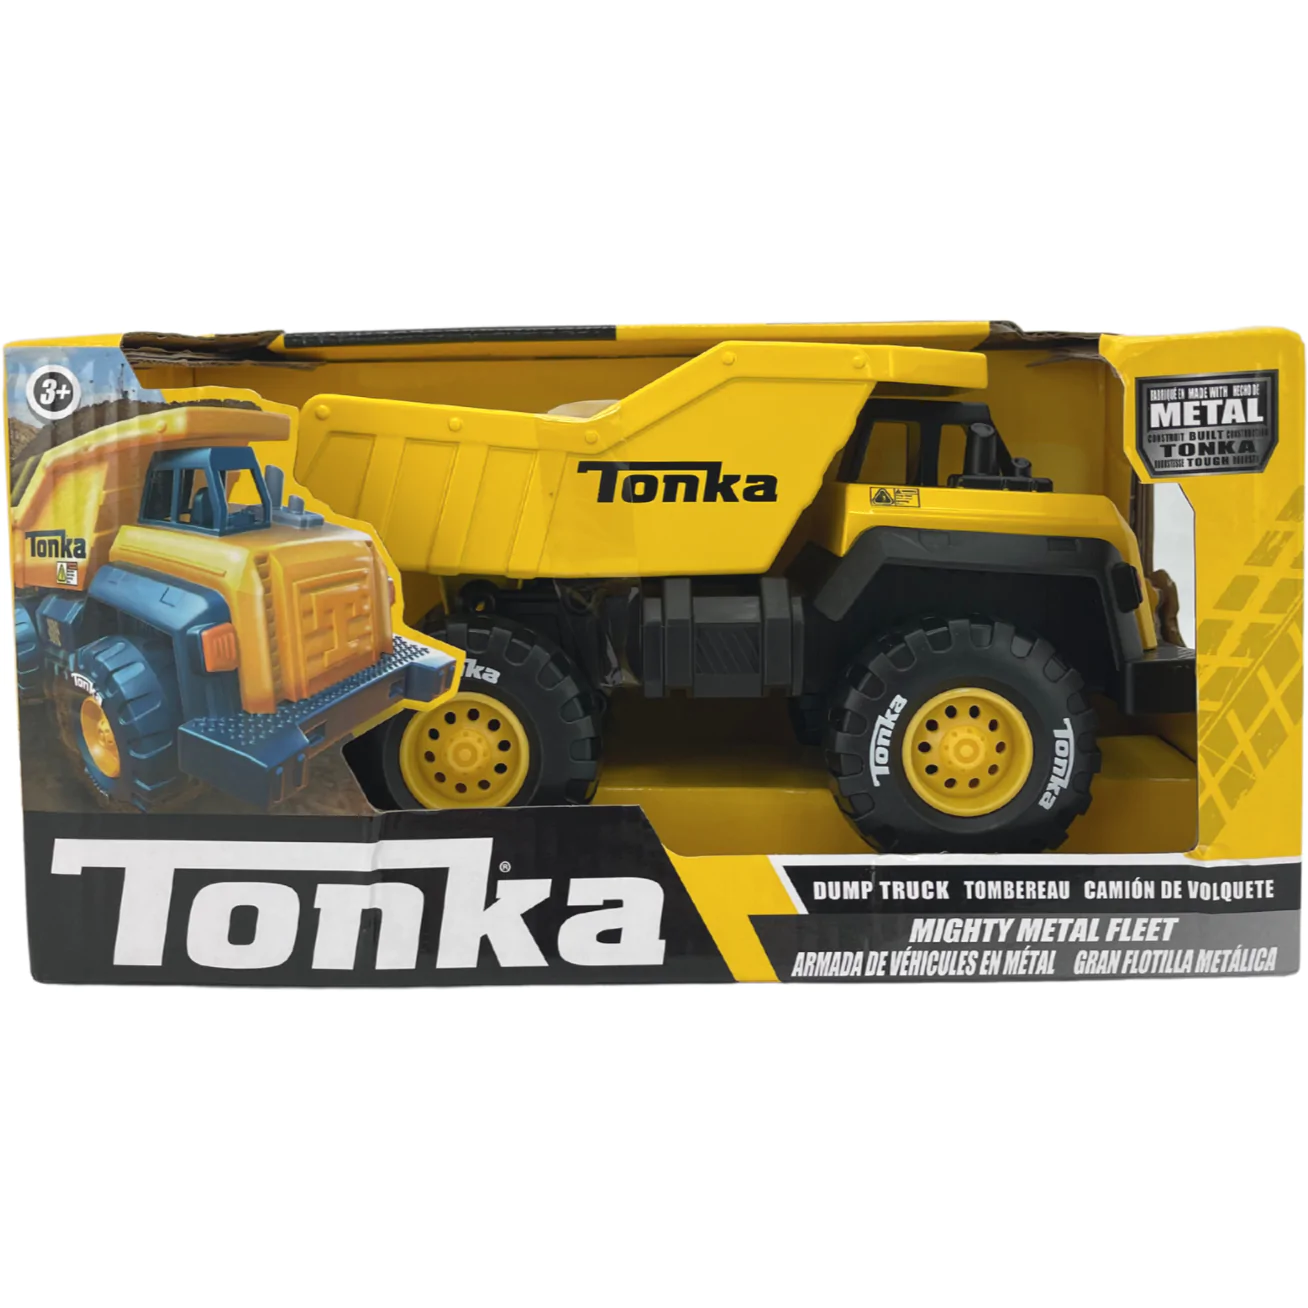 Tonka Mighty Metal Fleet Dump Truck / Yellow and Black / 8" Dump Truck **DEALS**